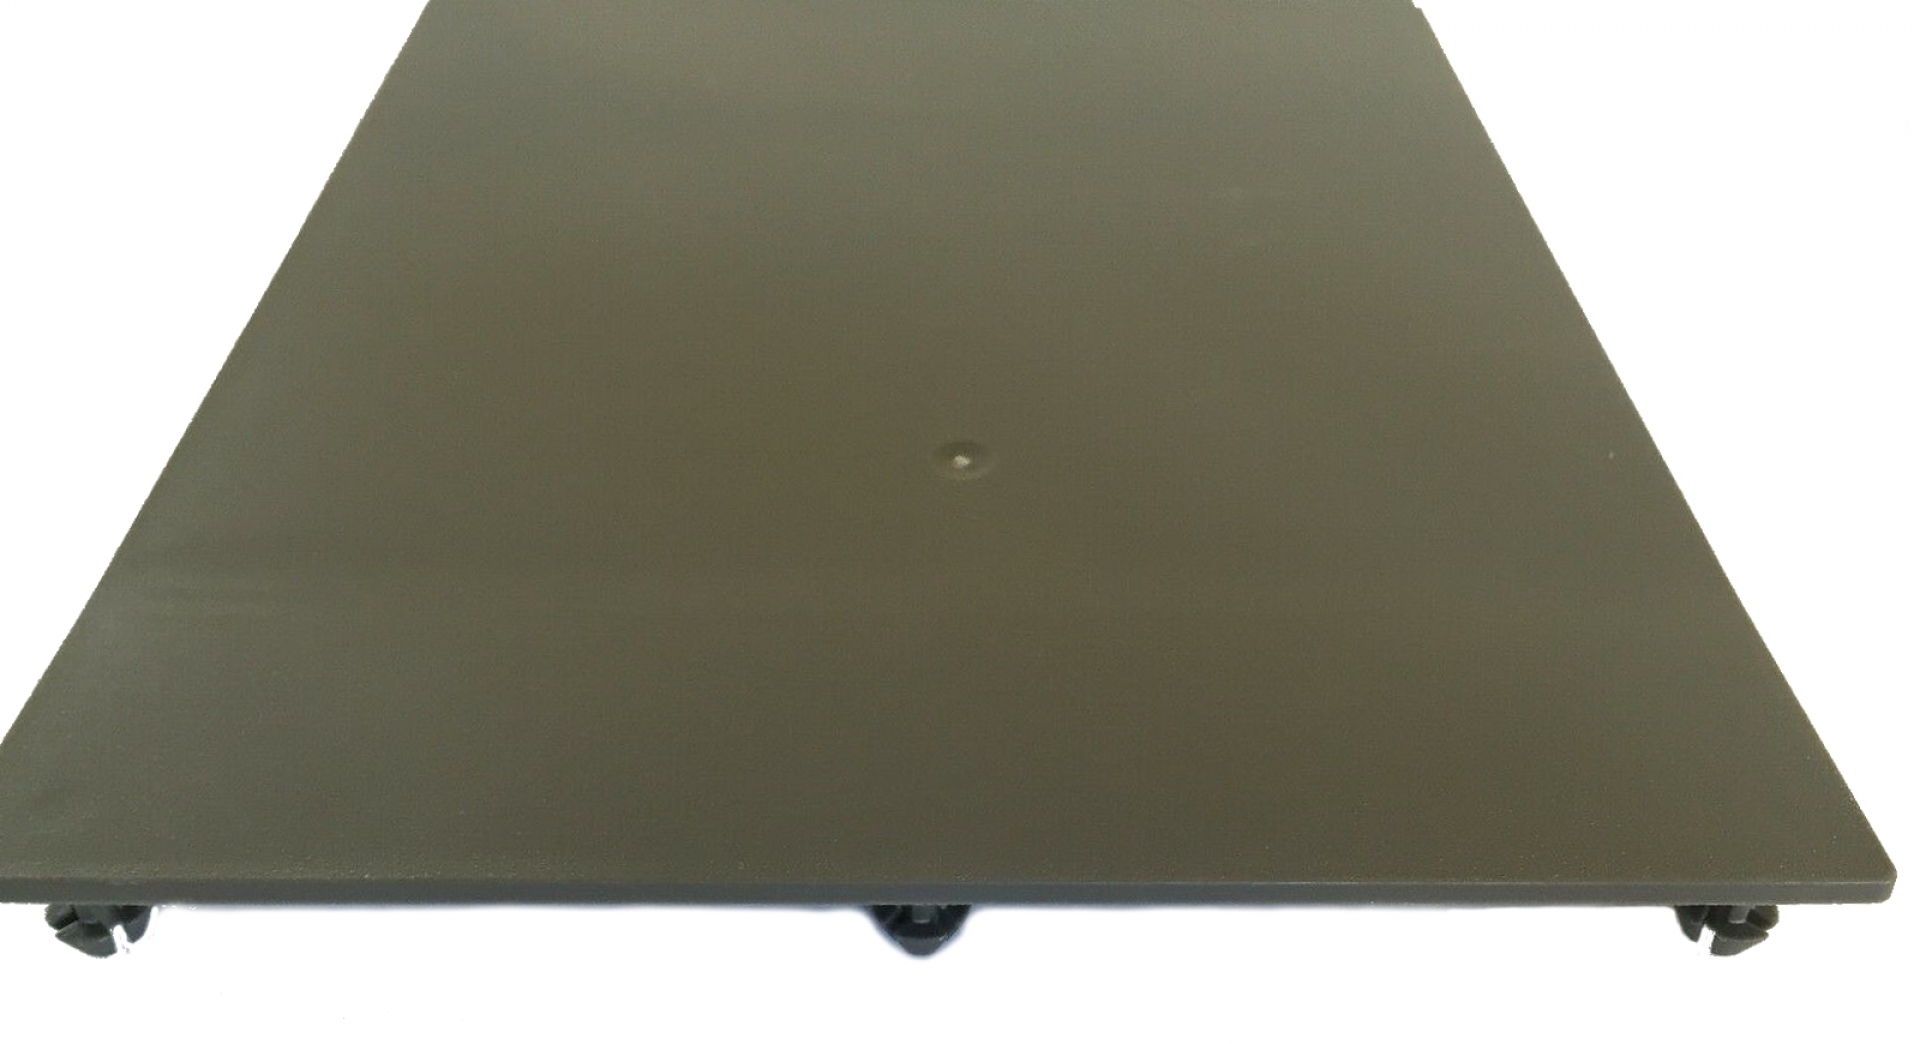 MEAFloor rough/smooth grating support approx. 800x200mm gray - Kopie - Kopie